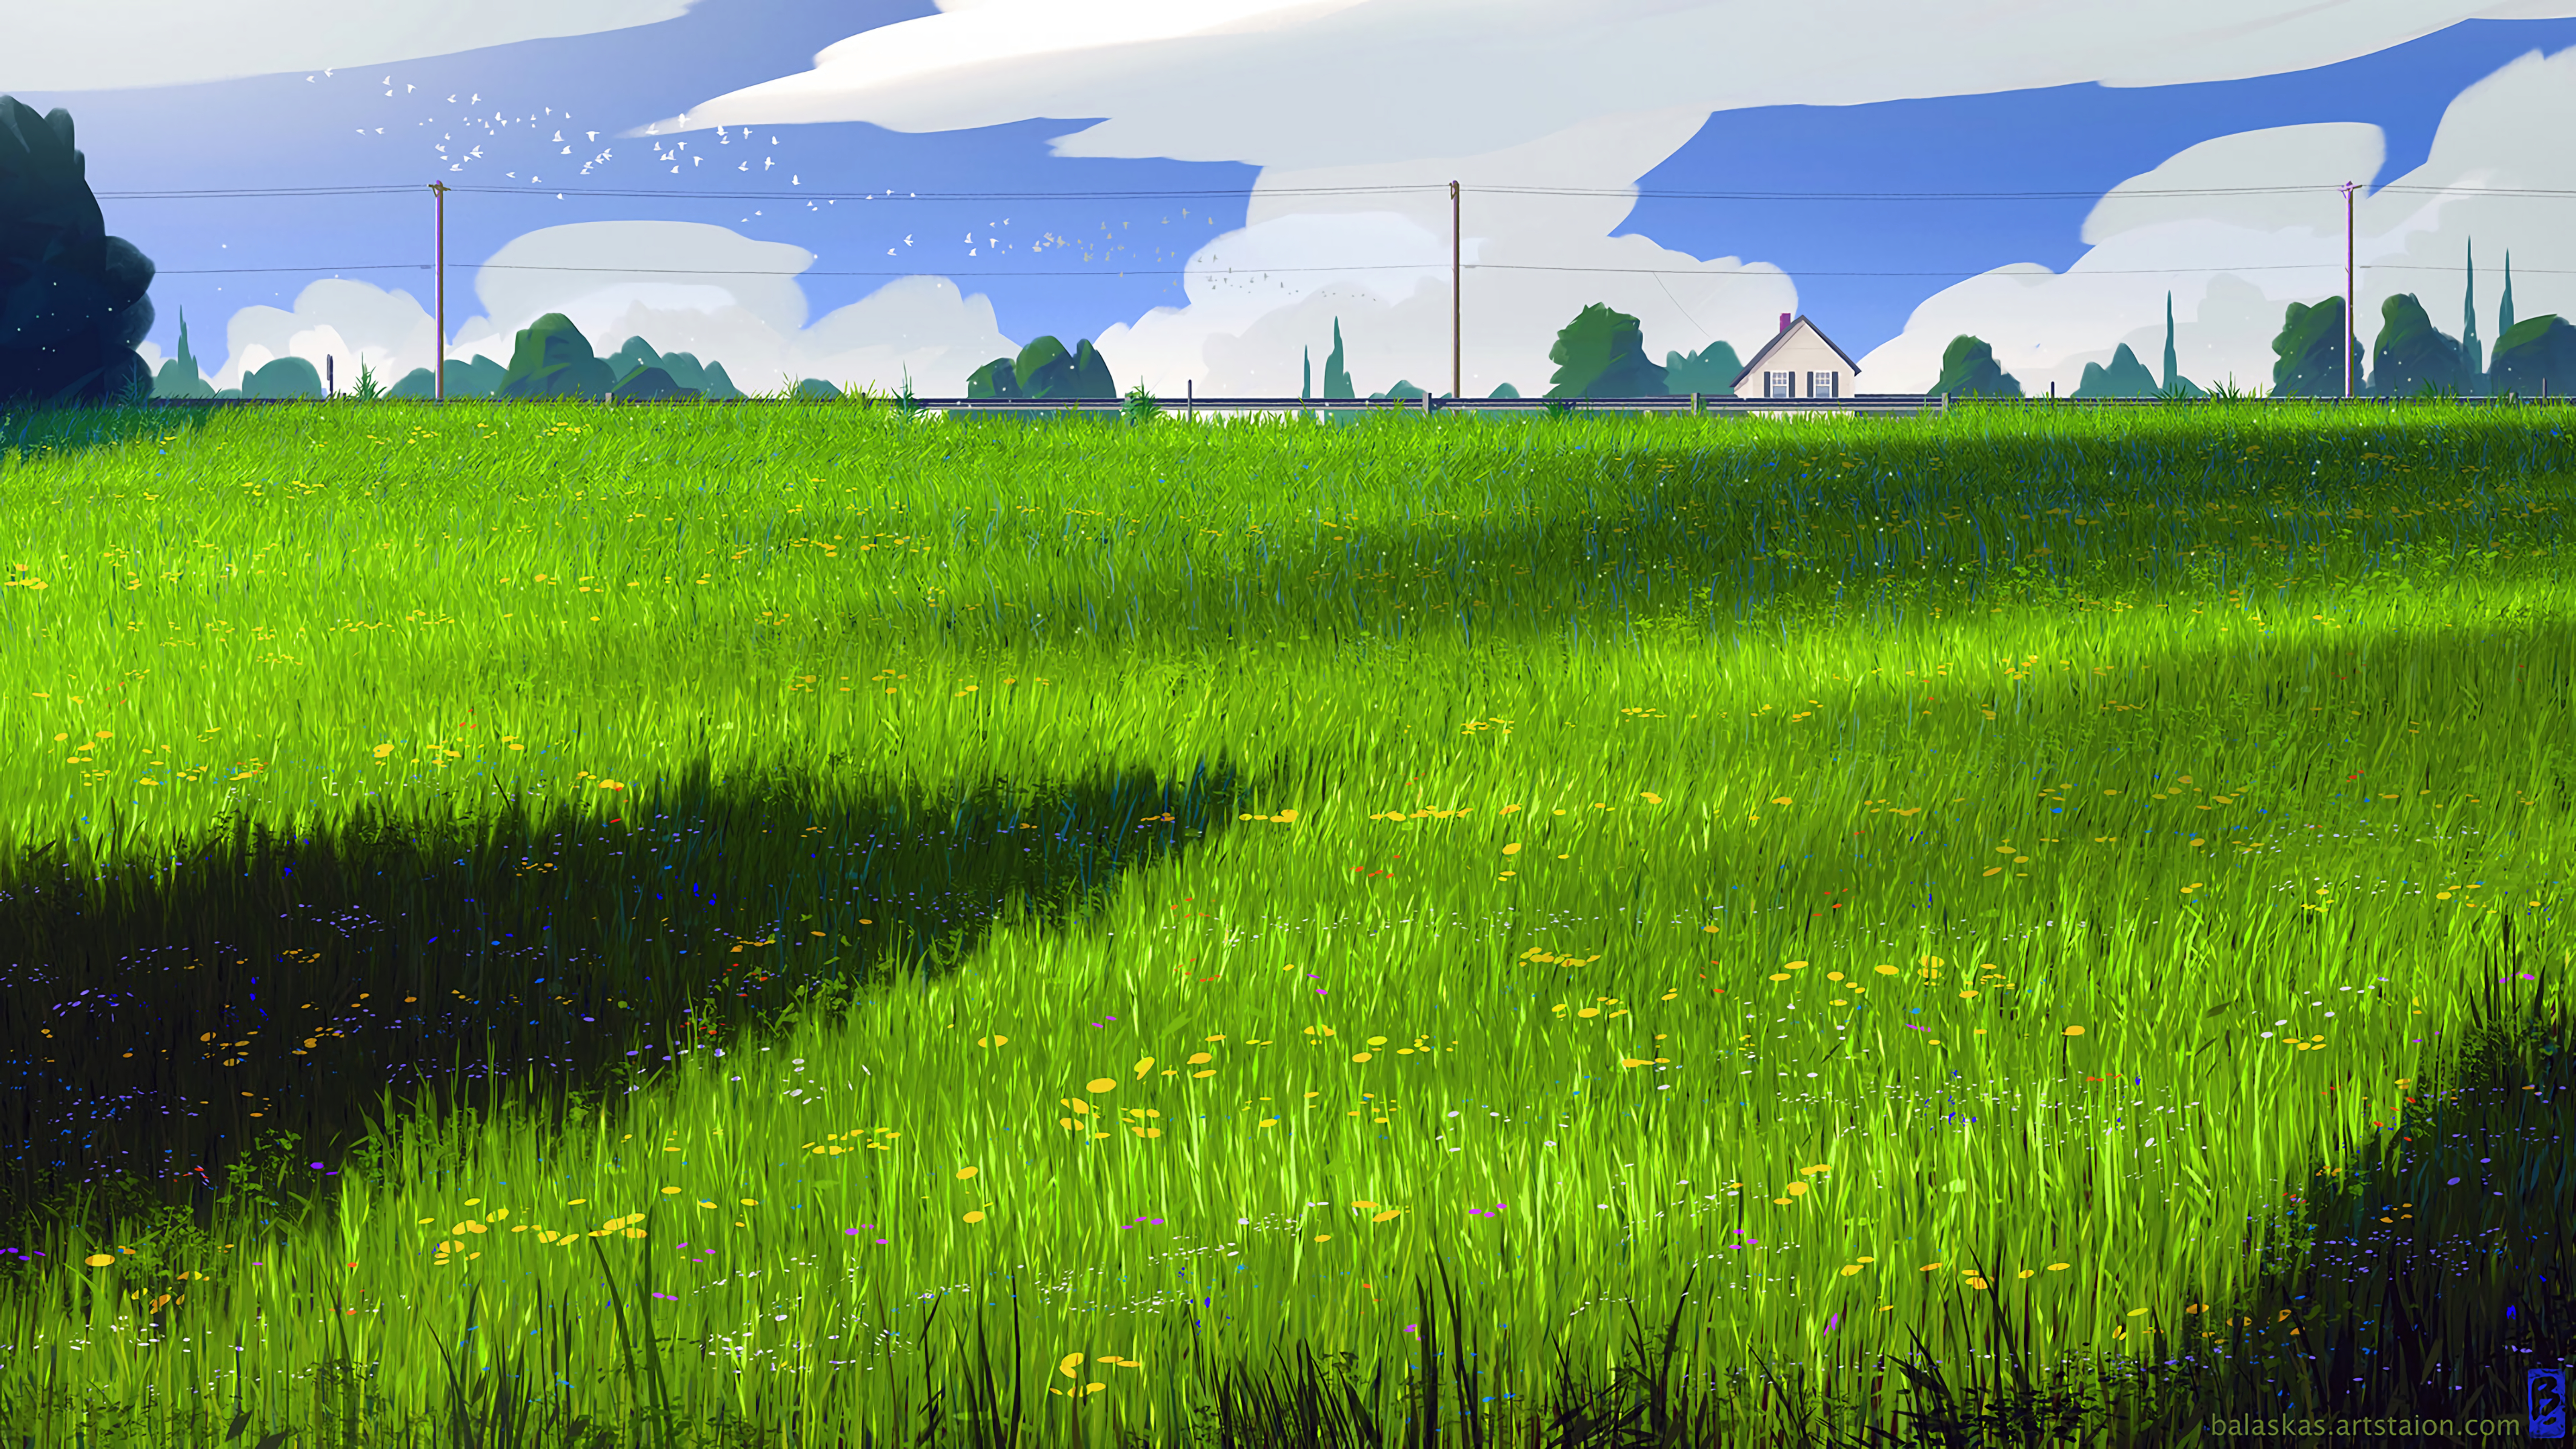 house, grass, art, field, meadow Image for desktop